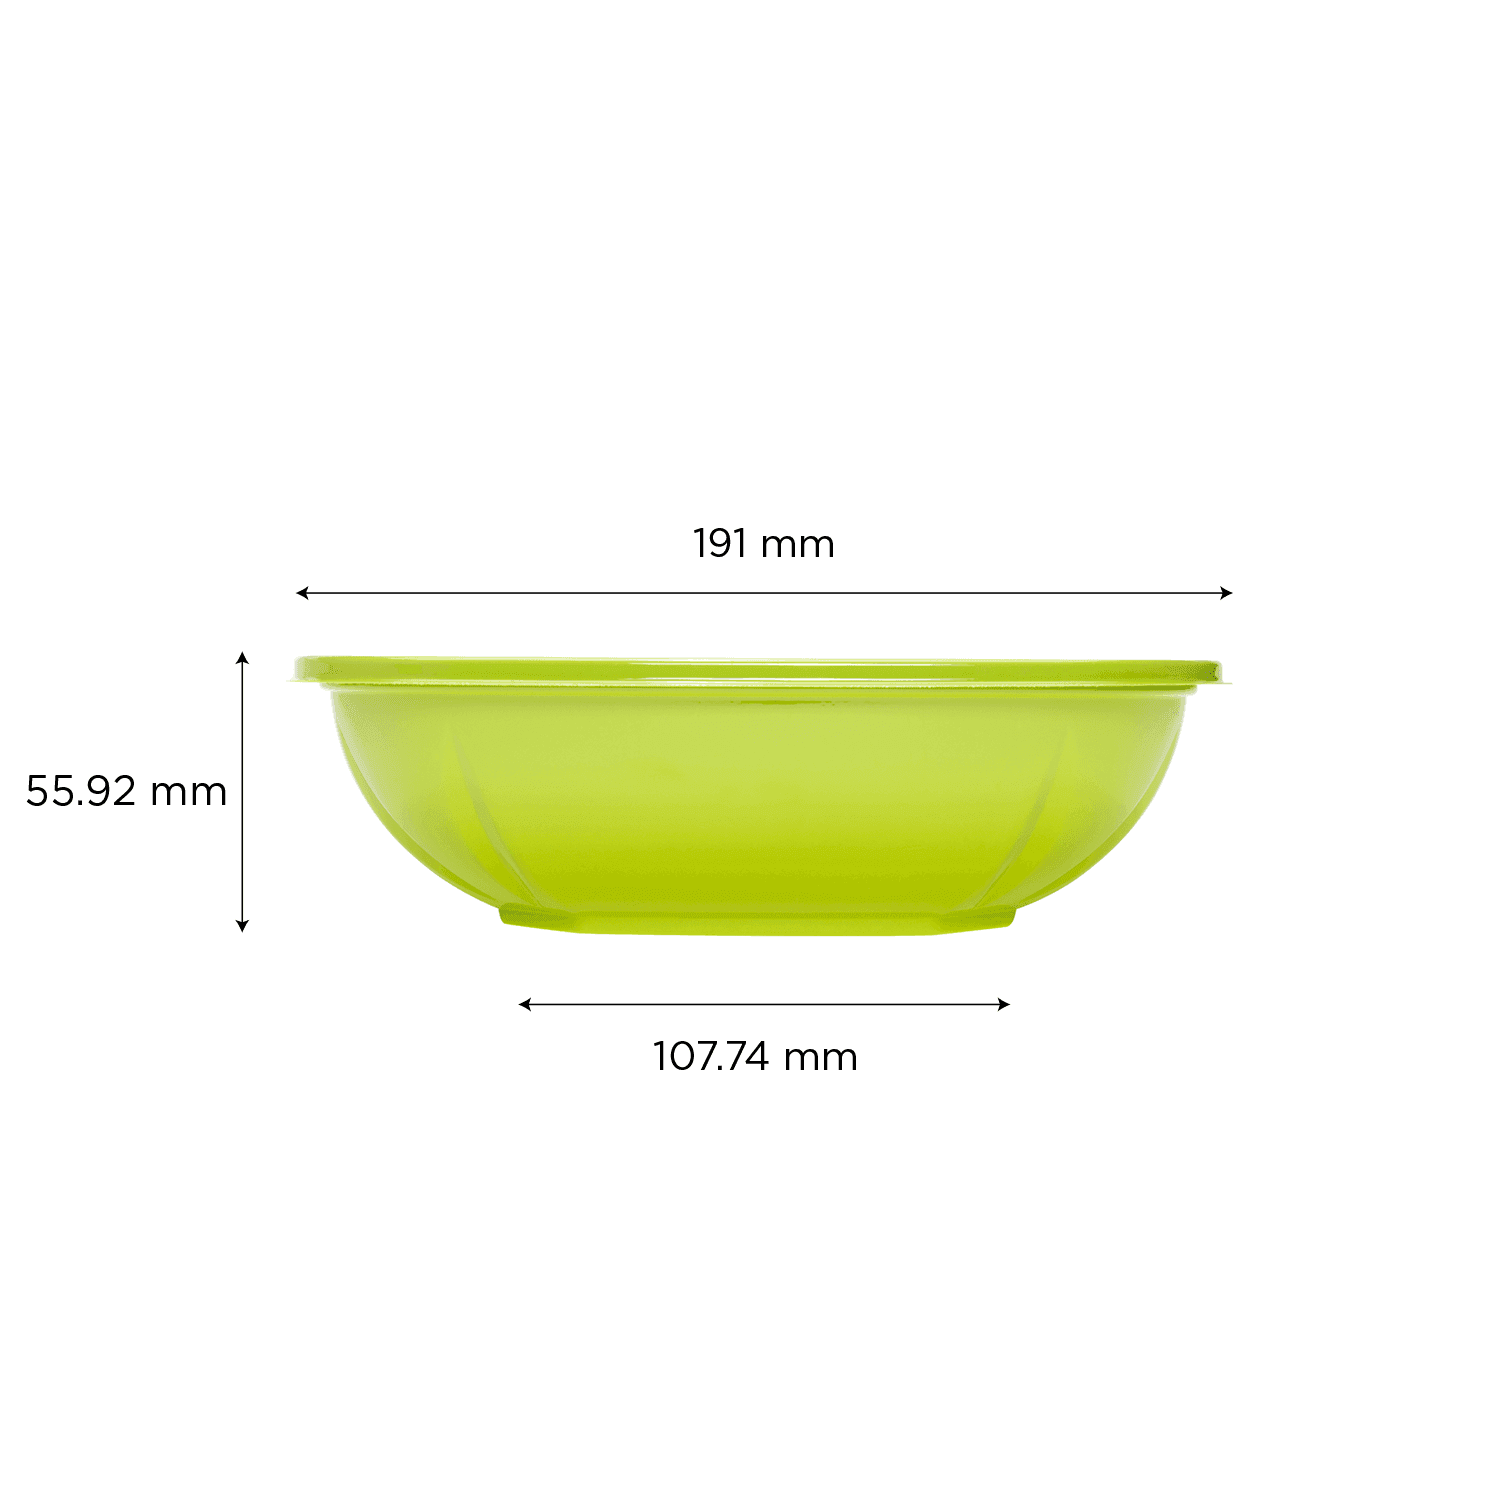 Green Karat 32oz PET Square Bowl with dimensions